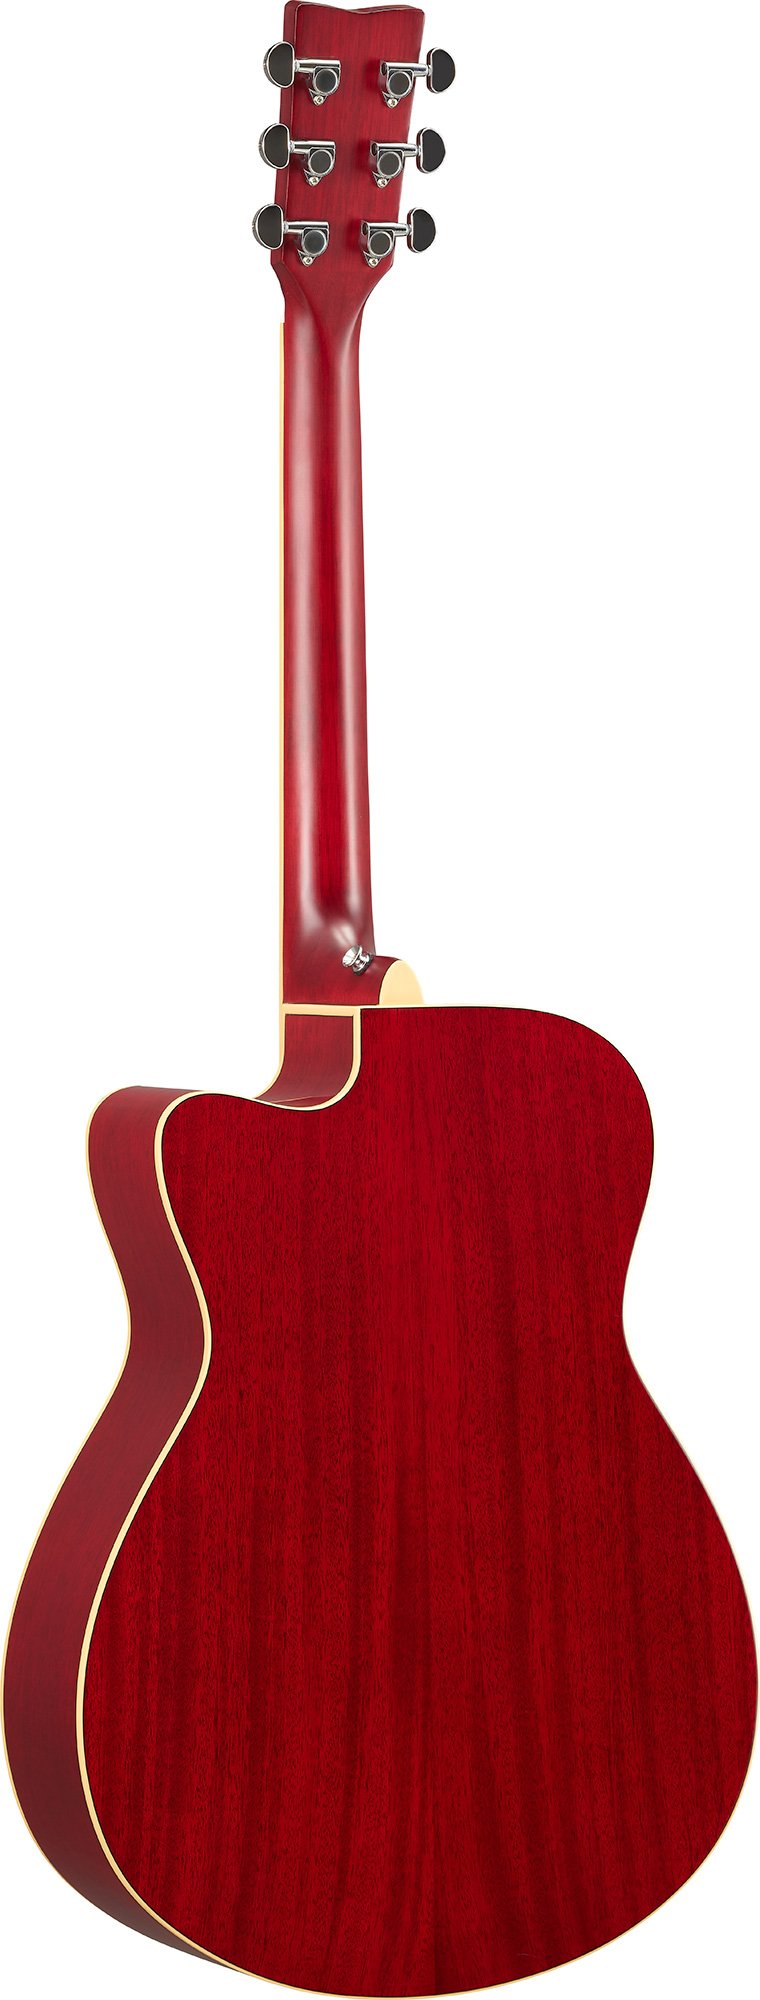 Yamaha Fsc-ta Transacoustic Cutaway Epicea Acajou Rw - Ruby Red - Acoustic guitar & electro - Variation 1